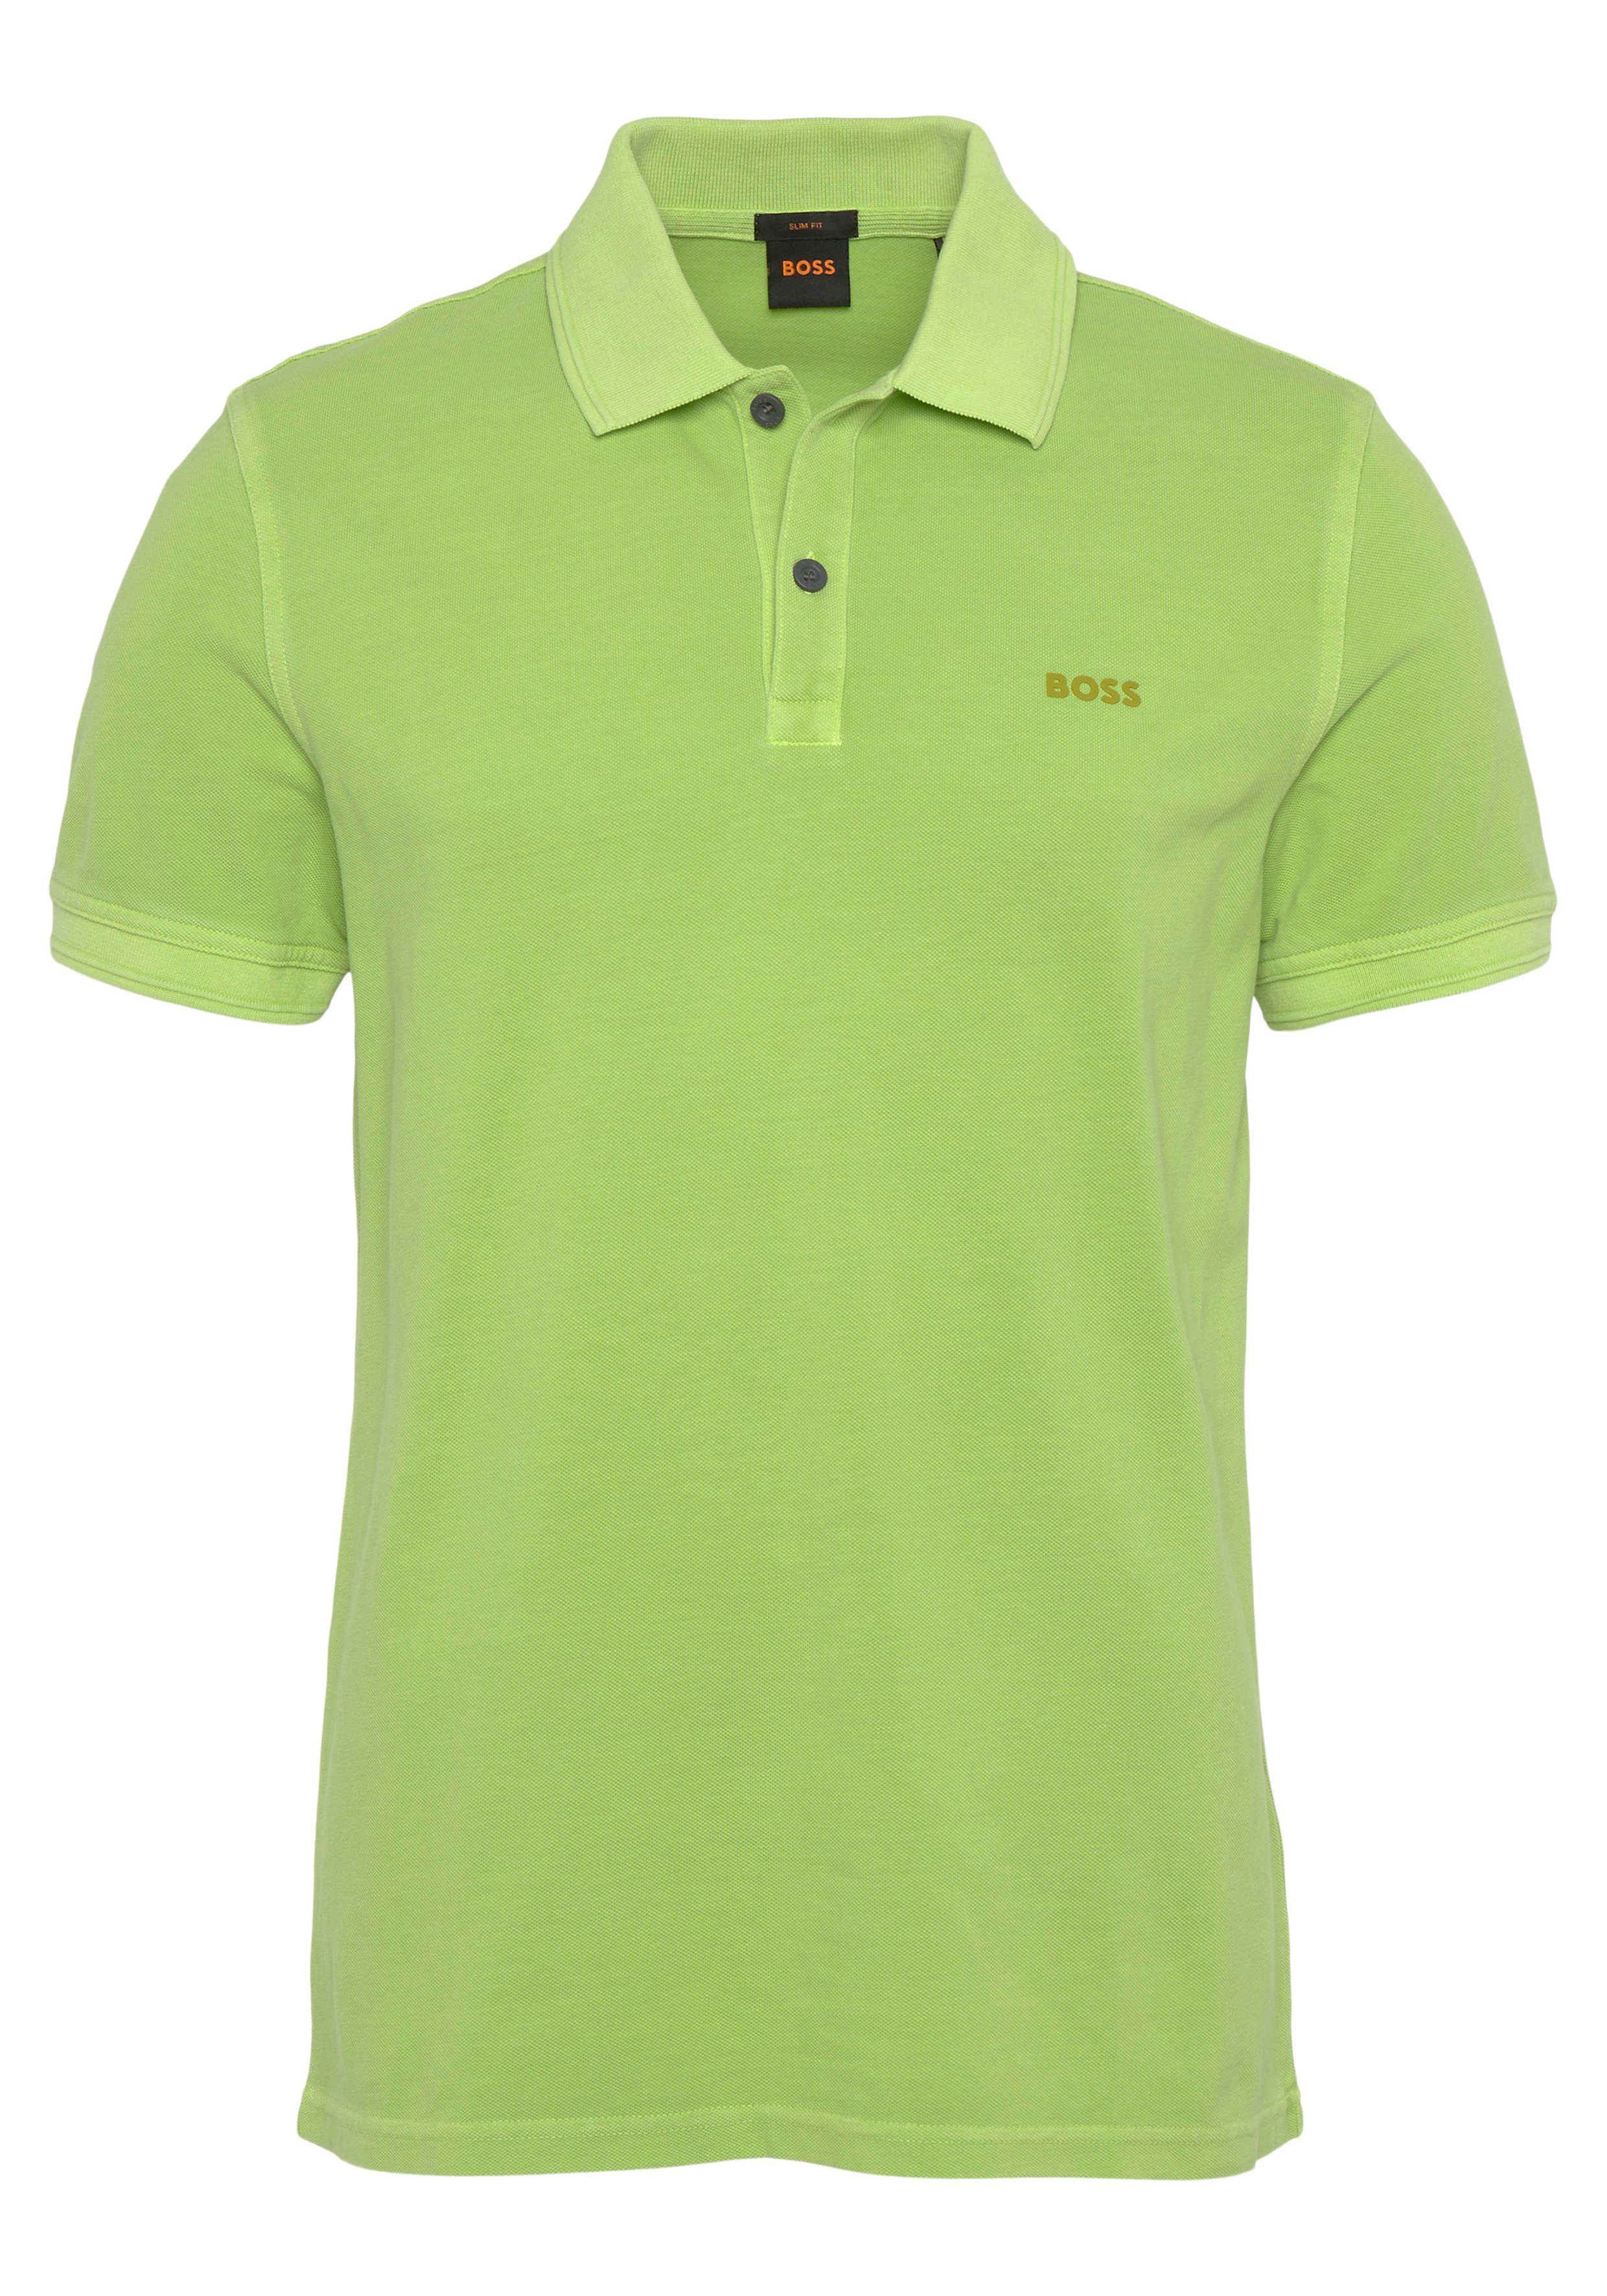 BOSS ORANGE am Prime Logoschriftzug Bright mit Brustkorb Green Poloshirt